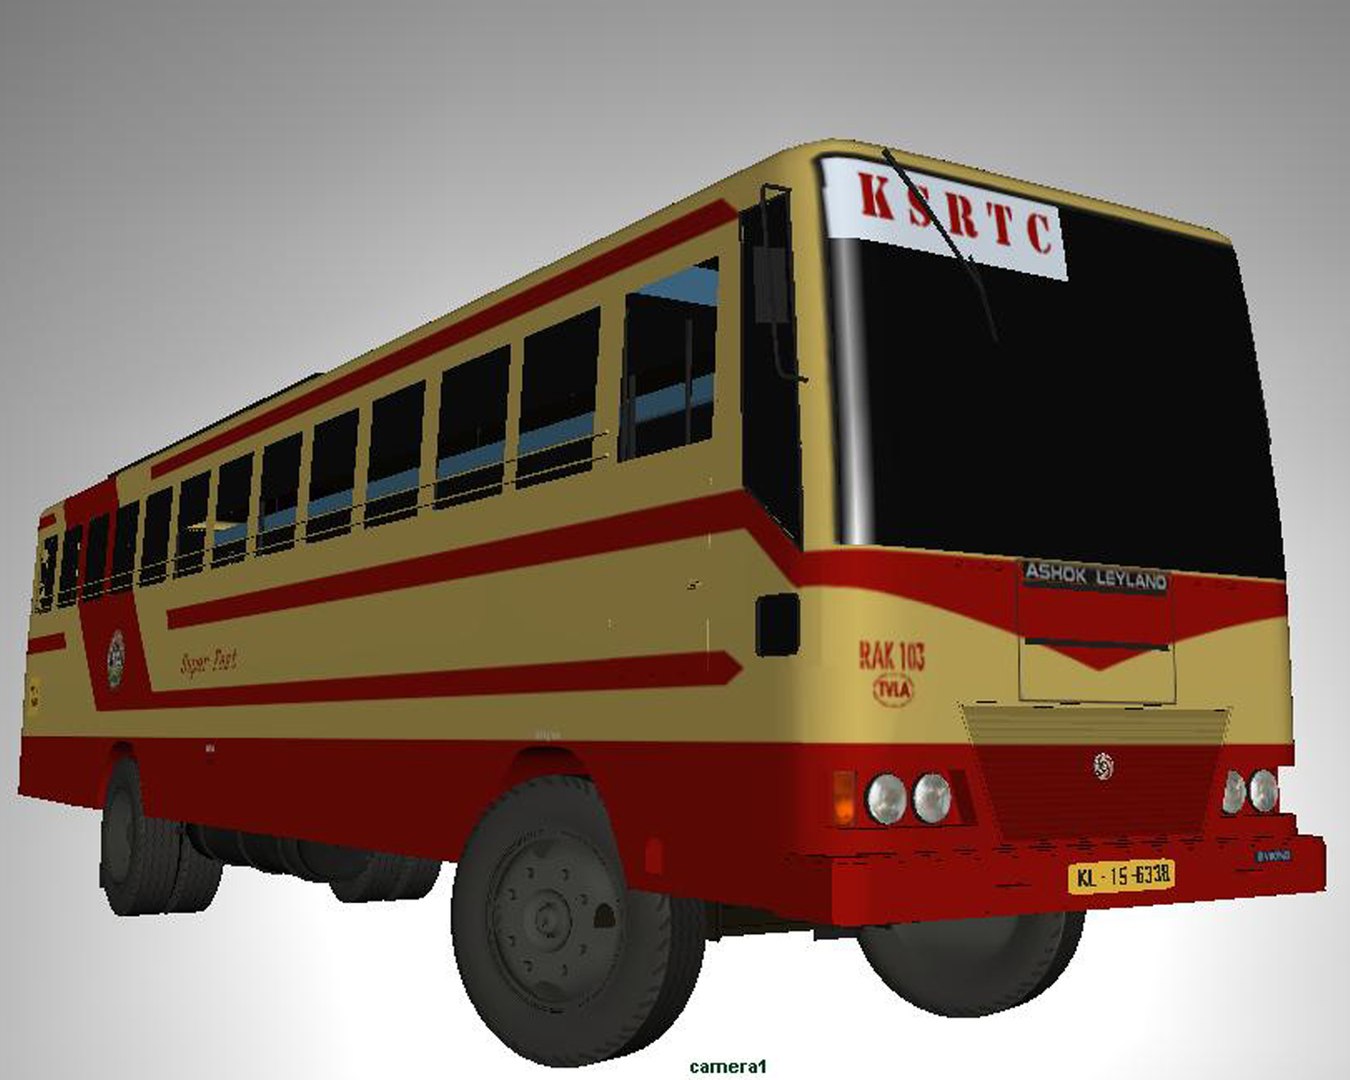 Illustrated Design Of KSRTC Garuda Volvo Multi-Axle Bus - Aanavandi Travel  Blog